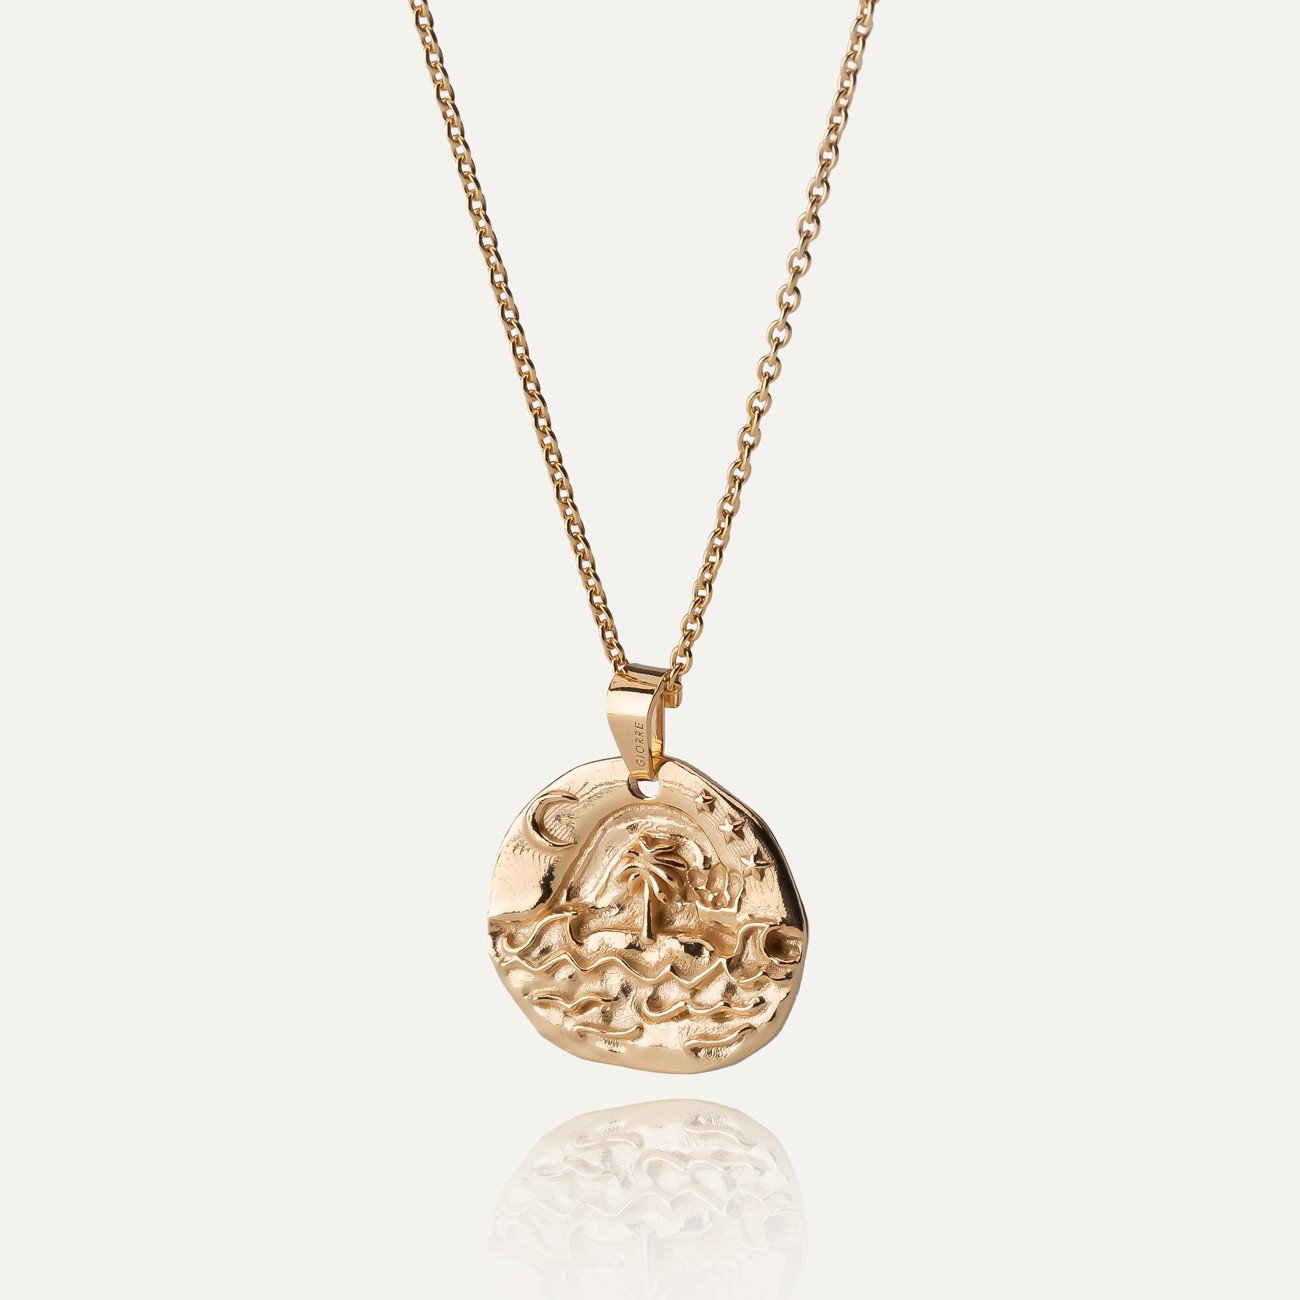 Sea talisman necklace, sterling silver 925